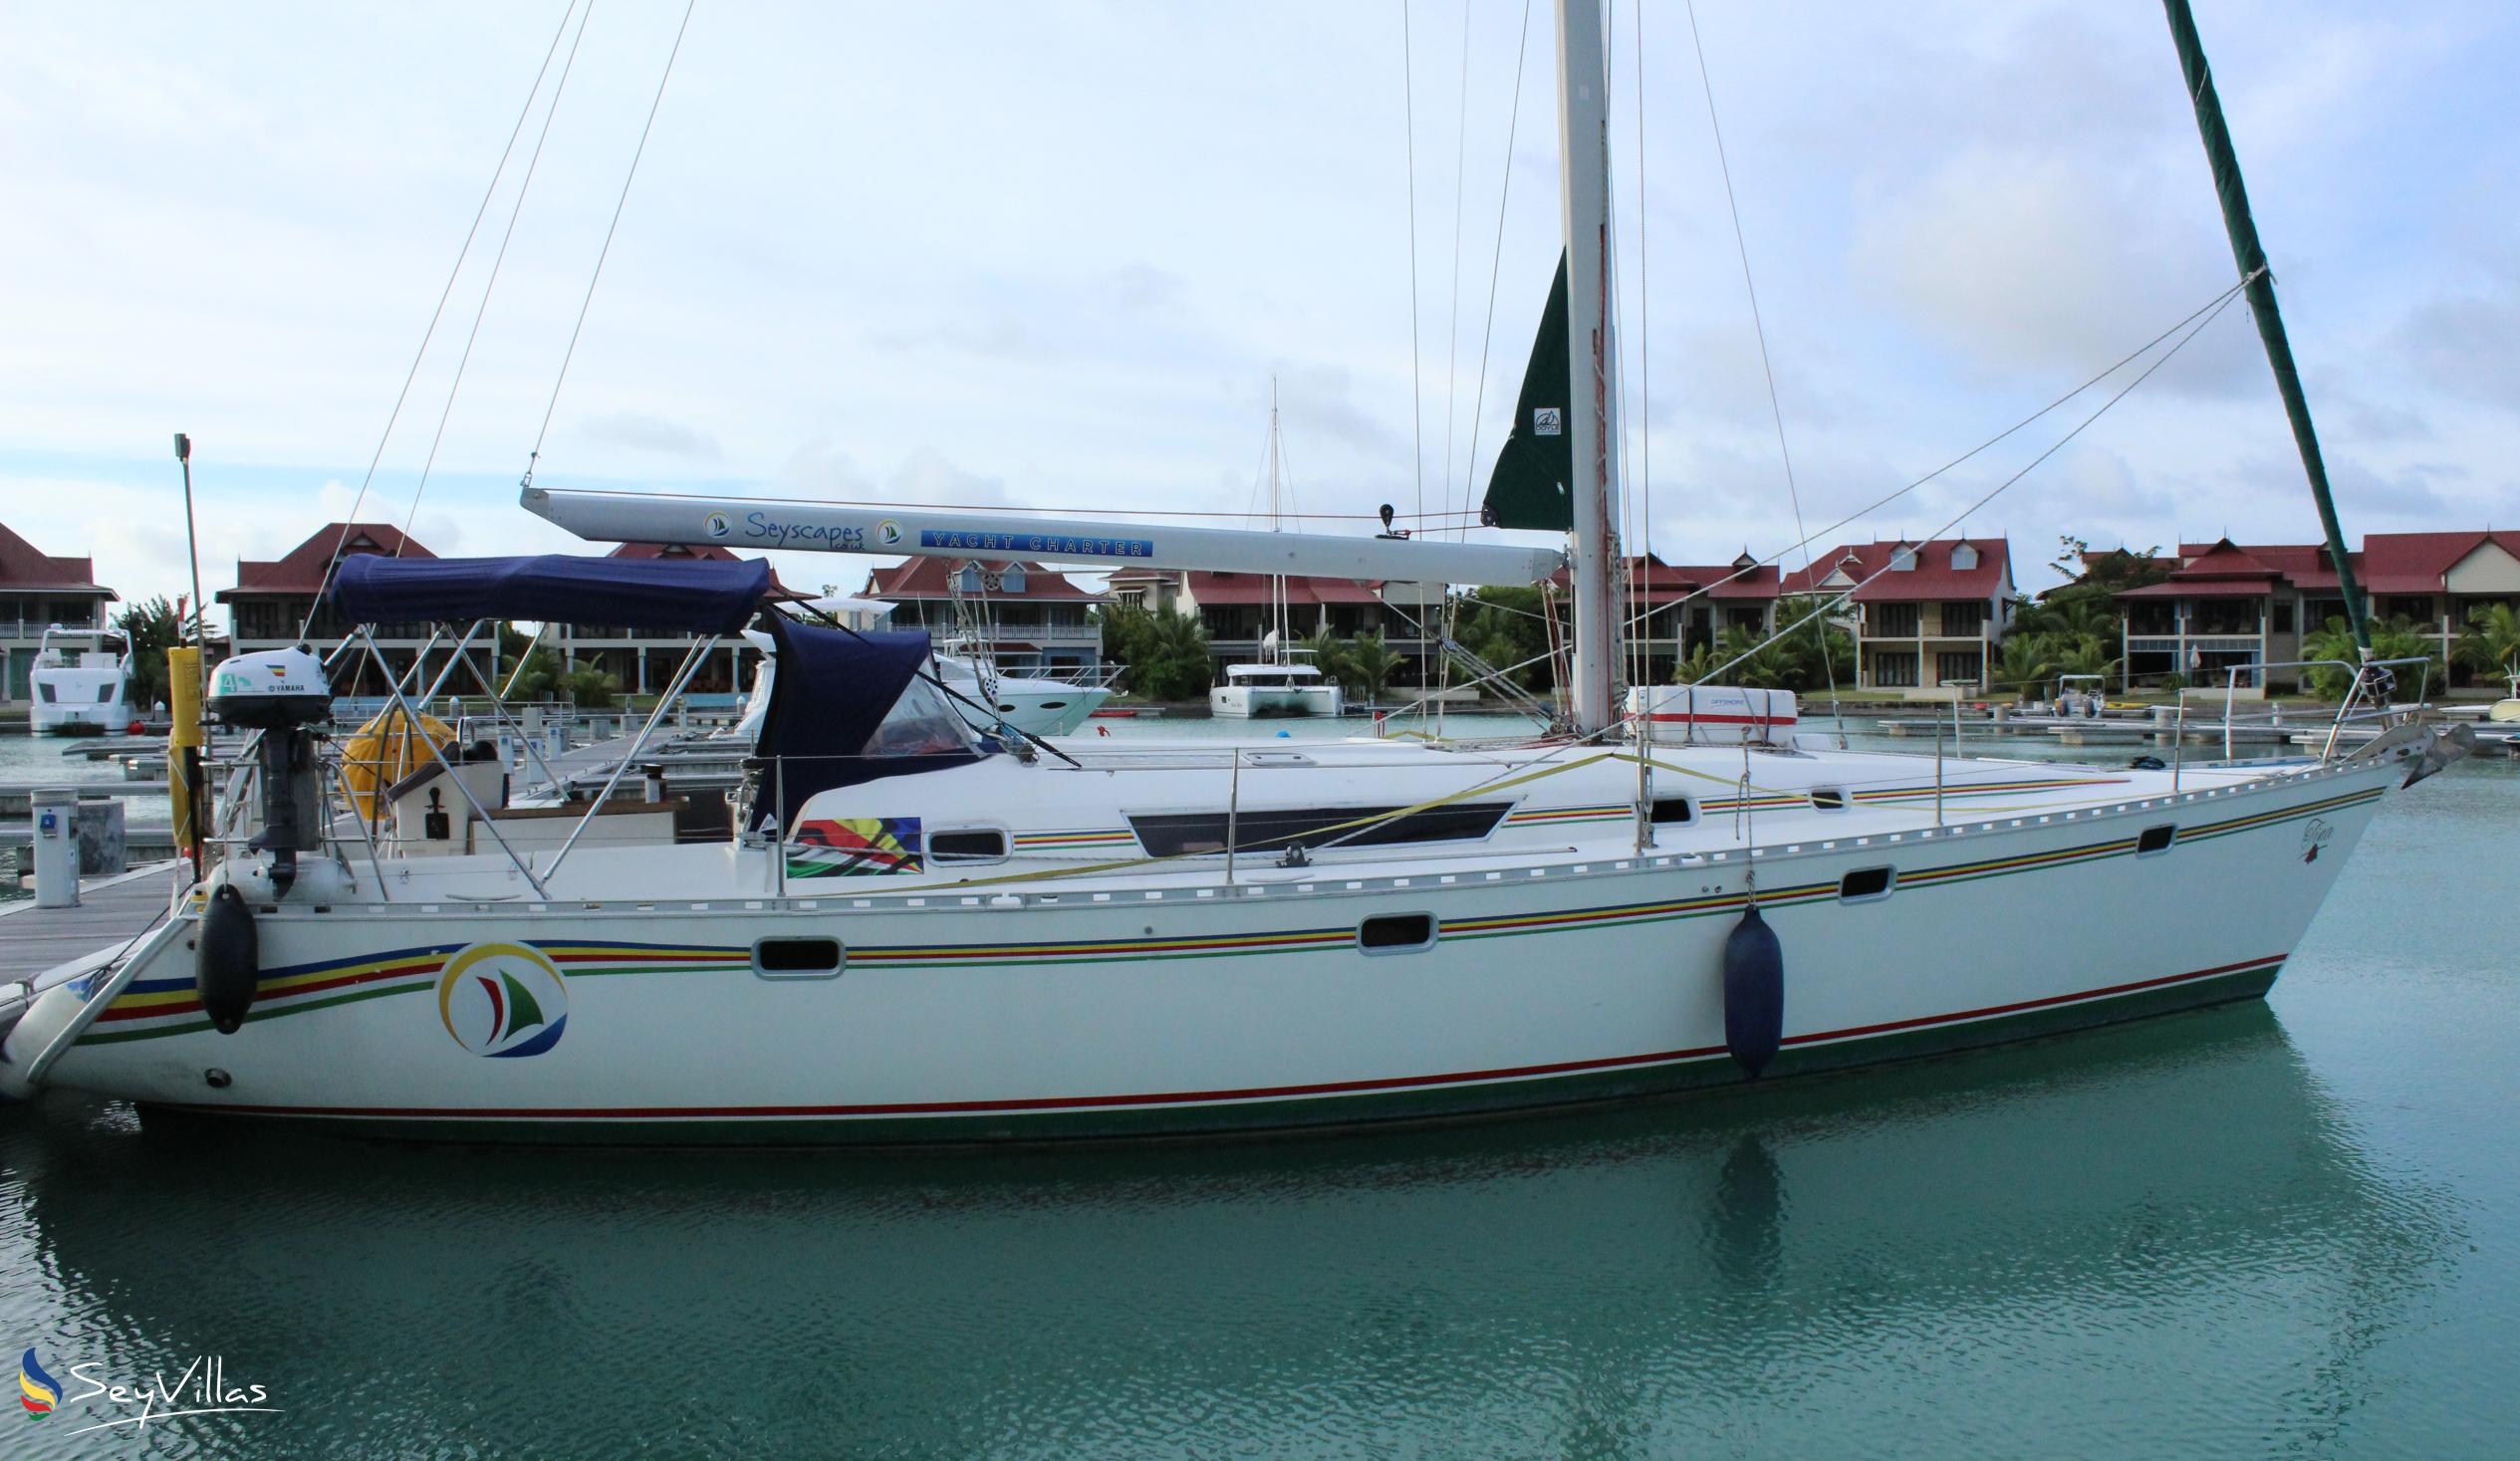 Foto 26: Seyscapes Yacht Charter - Vollcharter Tina - Seychellen (Seychellen)